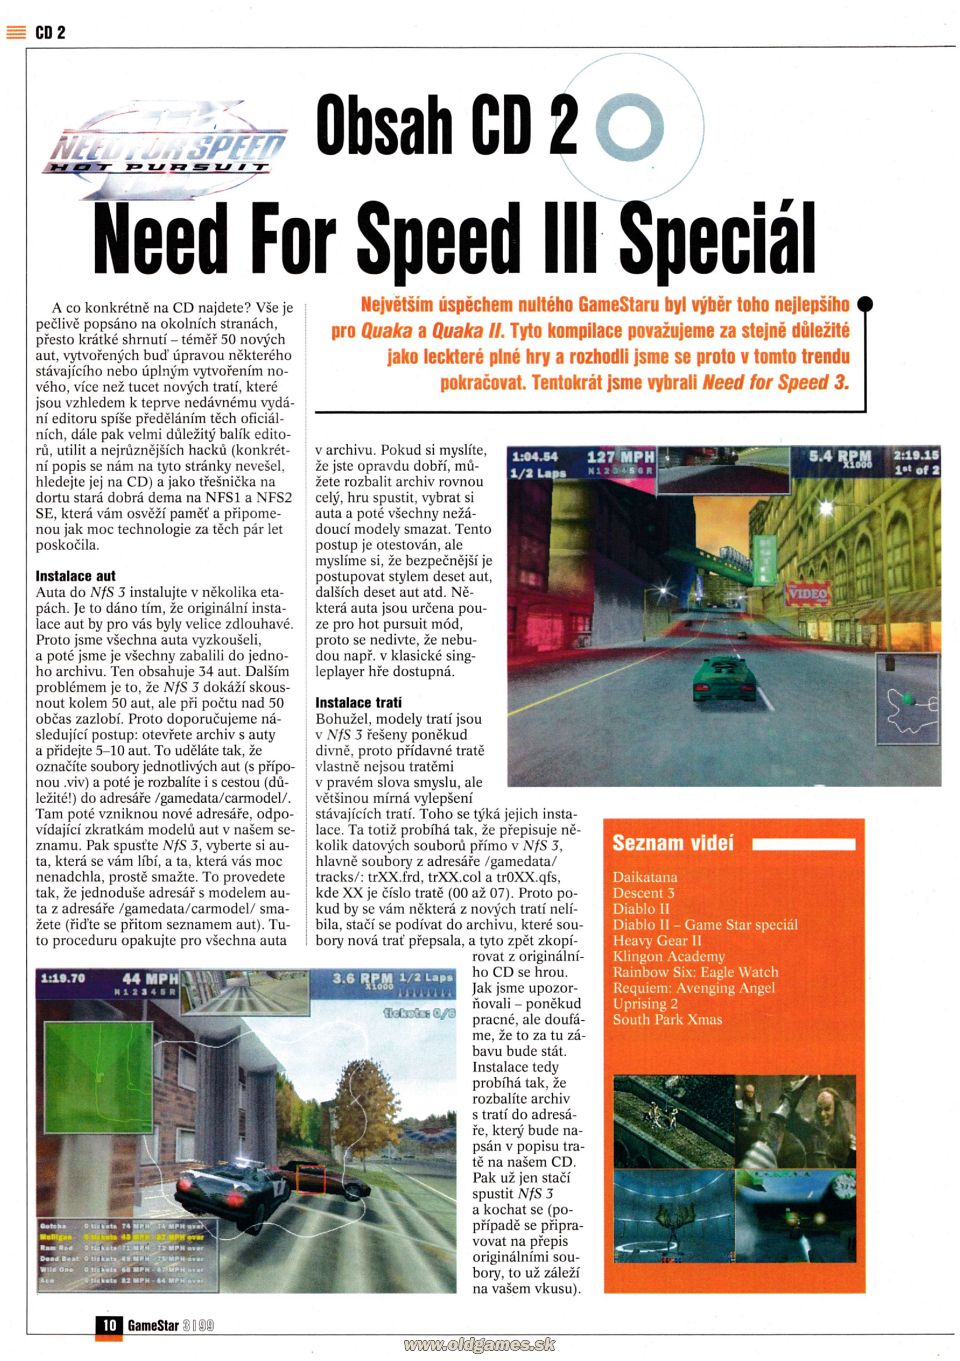 Obsah CD 2, Need for Speed III Speciál